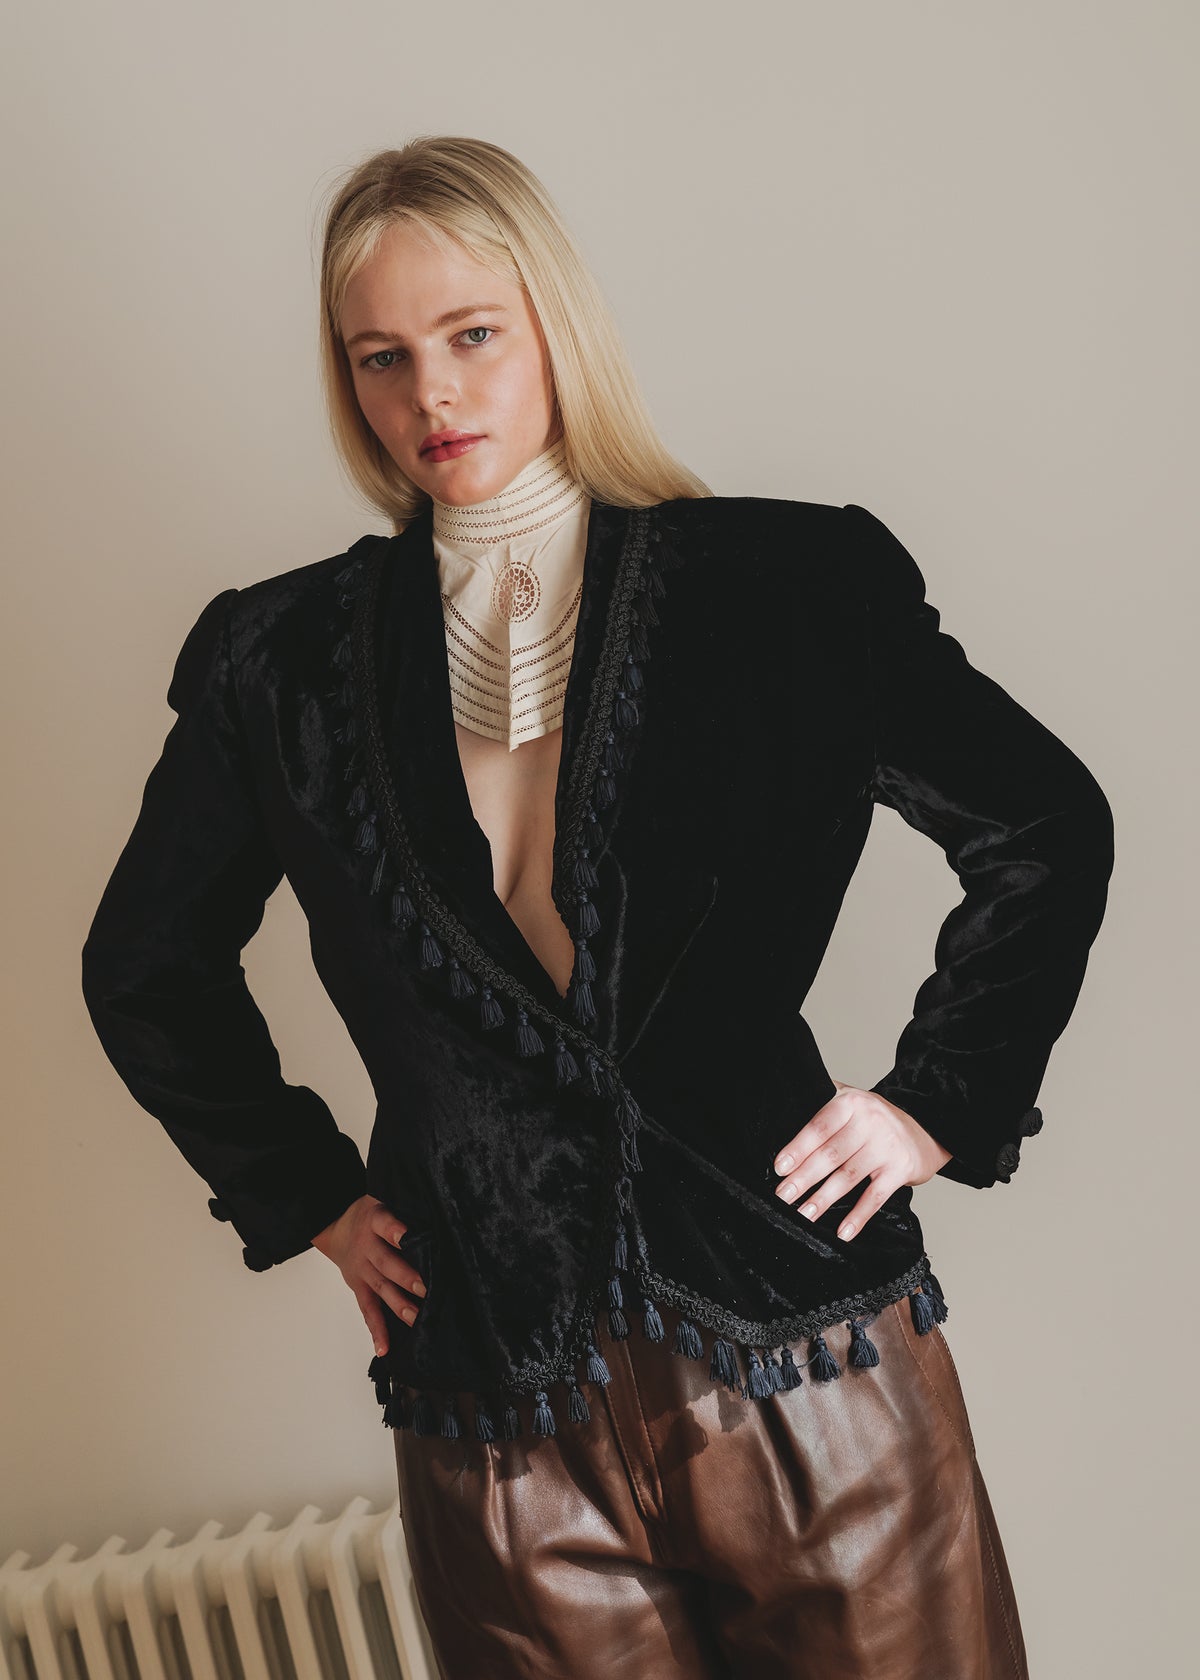 Escada Blazer Savannah Taupe Cashmere-Silk Size 36 One-Button Jacket –  Celebrity Owned